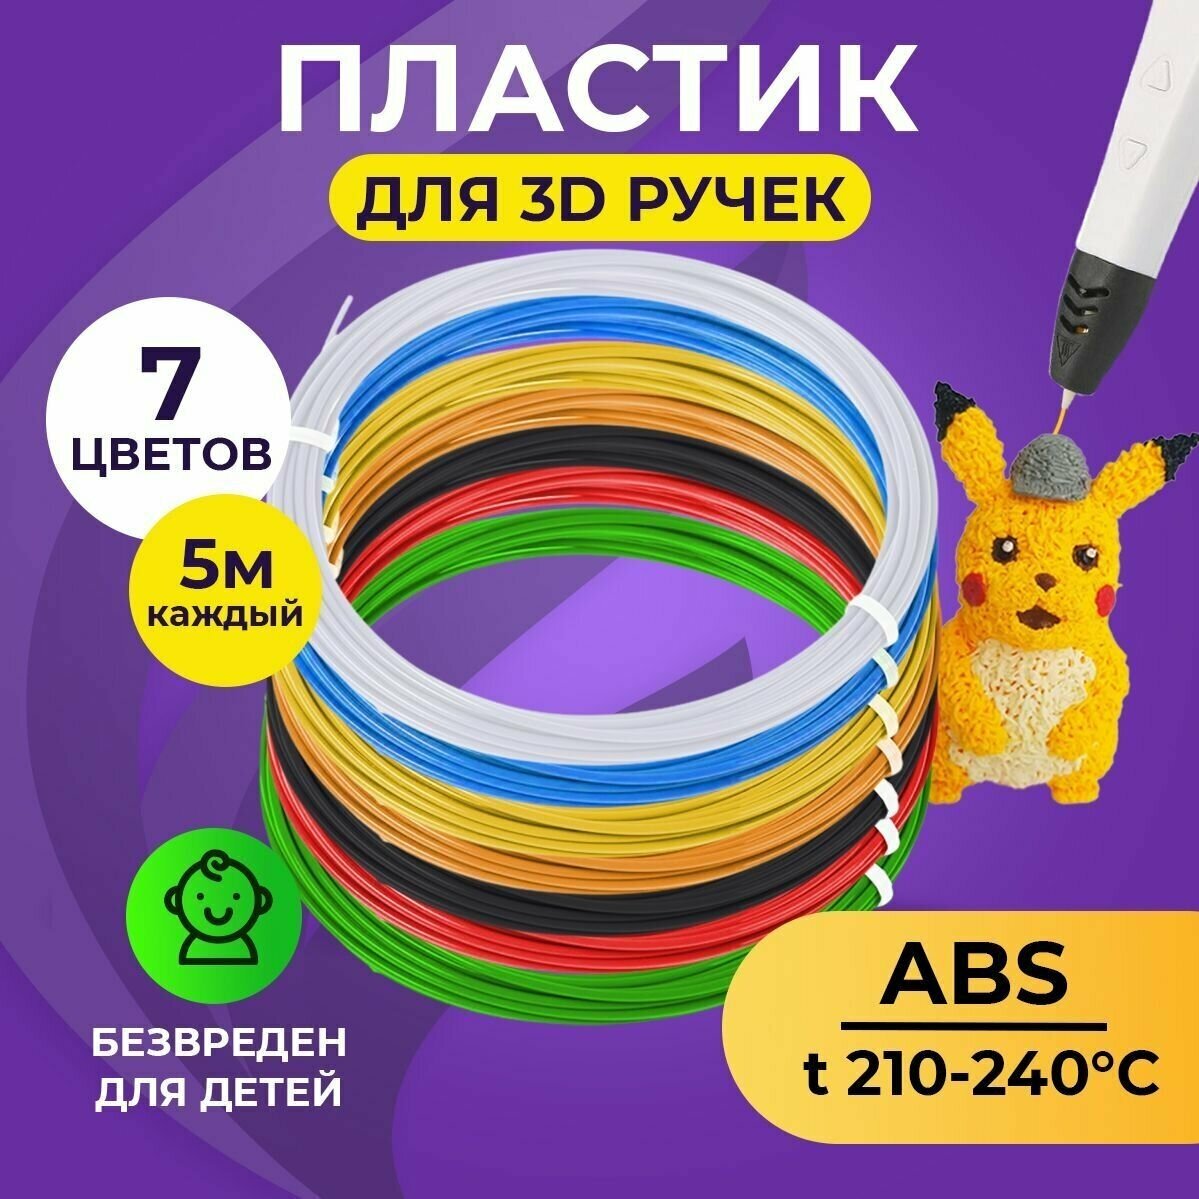 Набор ABS пластика для 3D ручек (7 цветов по 5 метров) Funtasy / картриджи для 3д ручки  стержни для 3д ручки абс